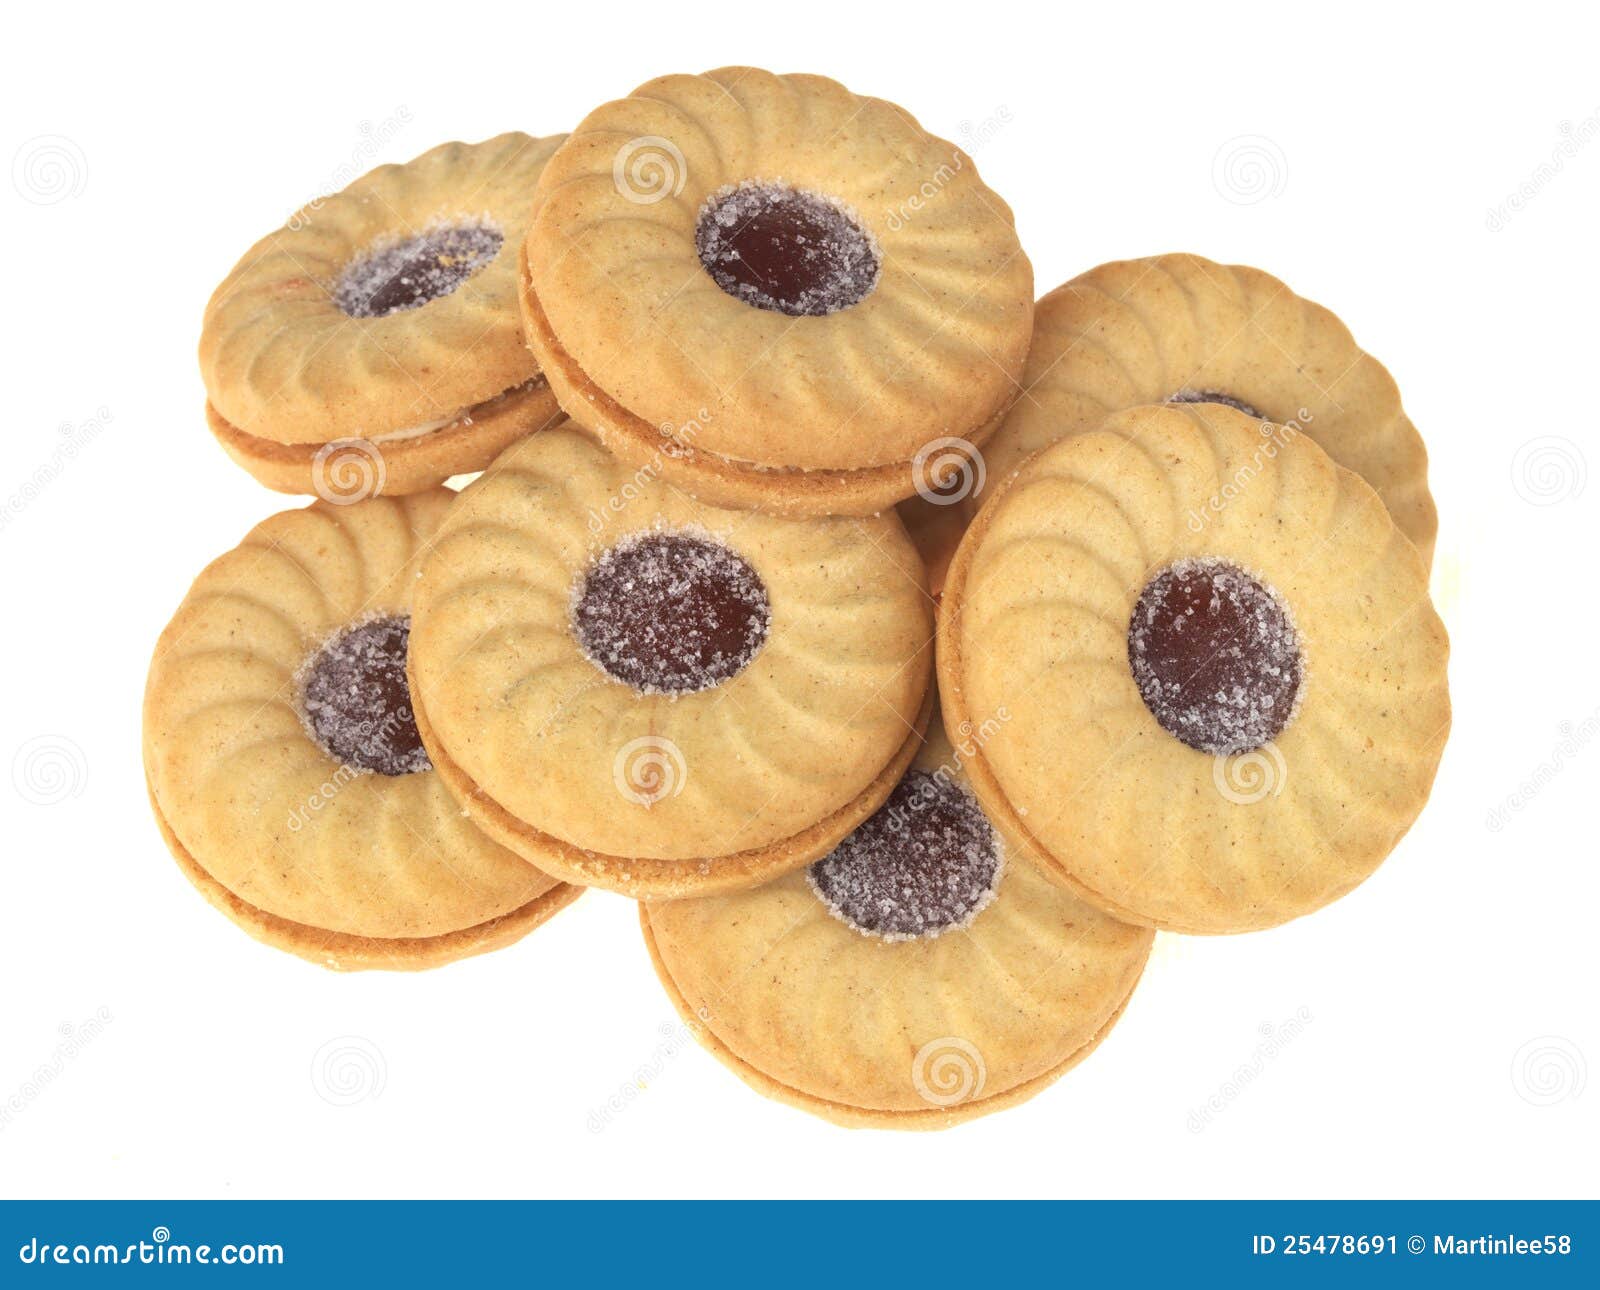 jam-filled-ring-biscuits-25478691.jpg